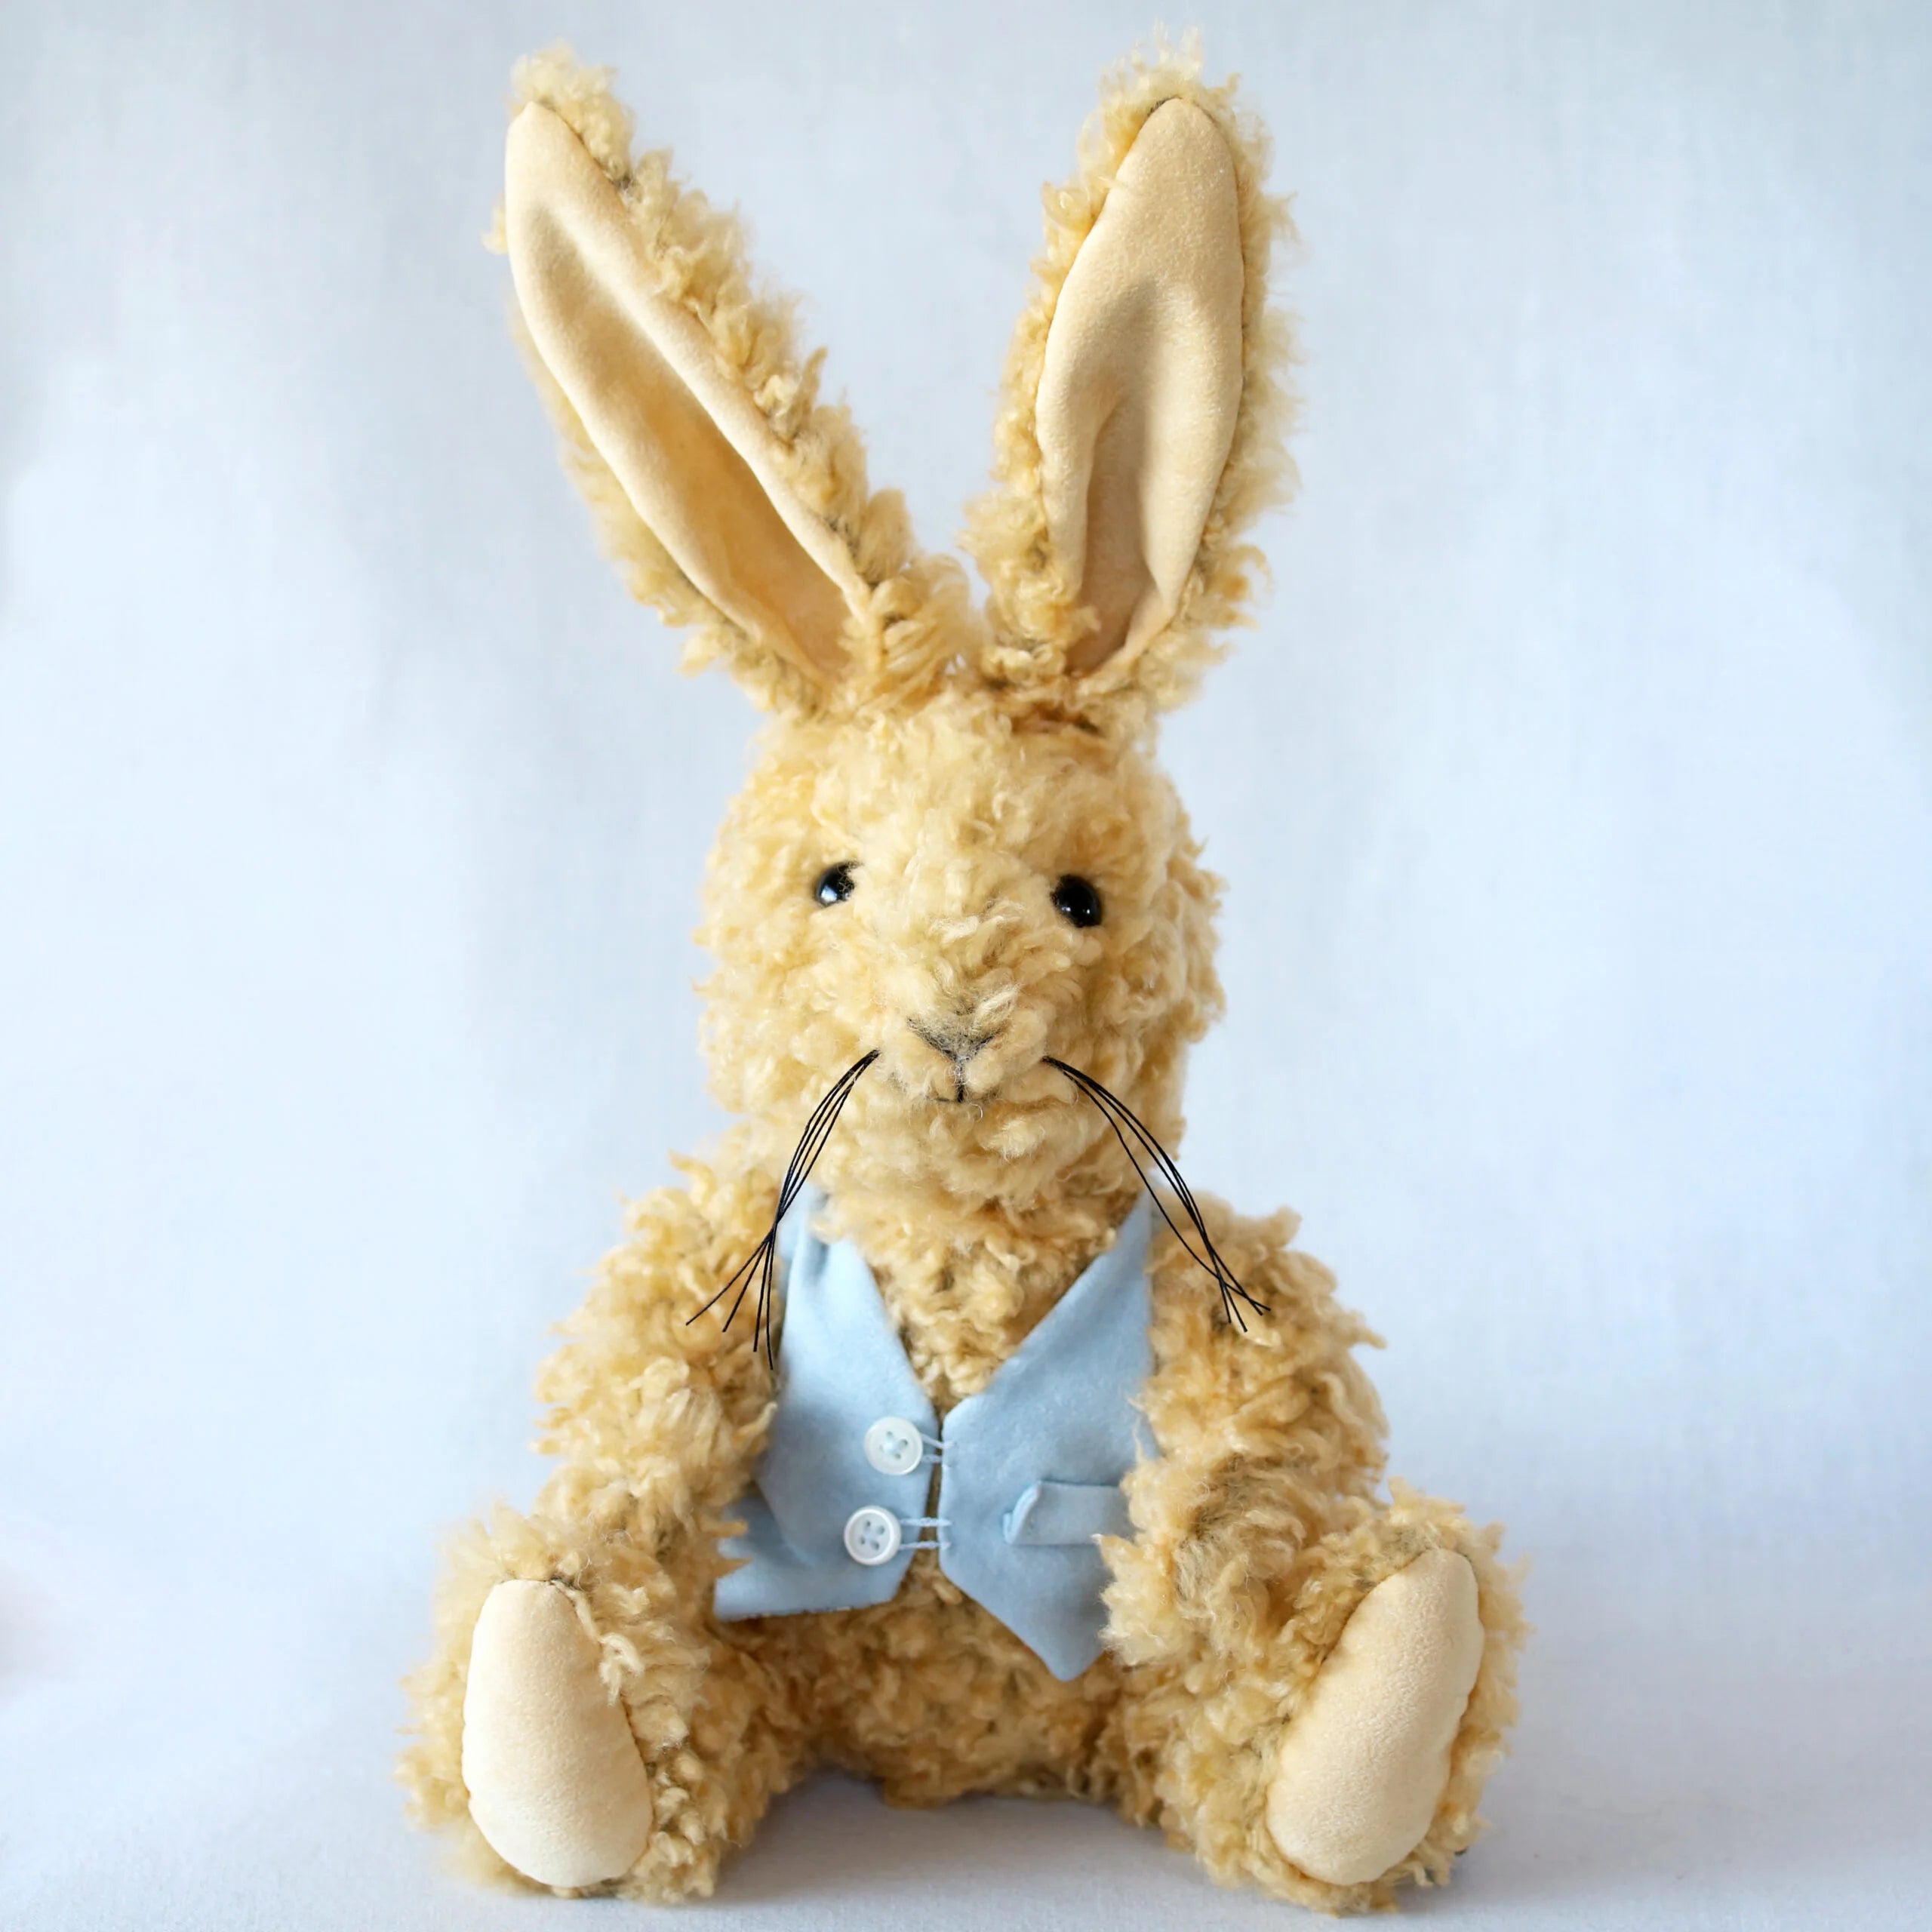 Chester The Handmade Rabbit from Canterbury Bears.